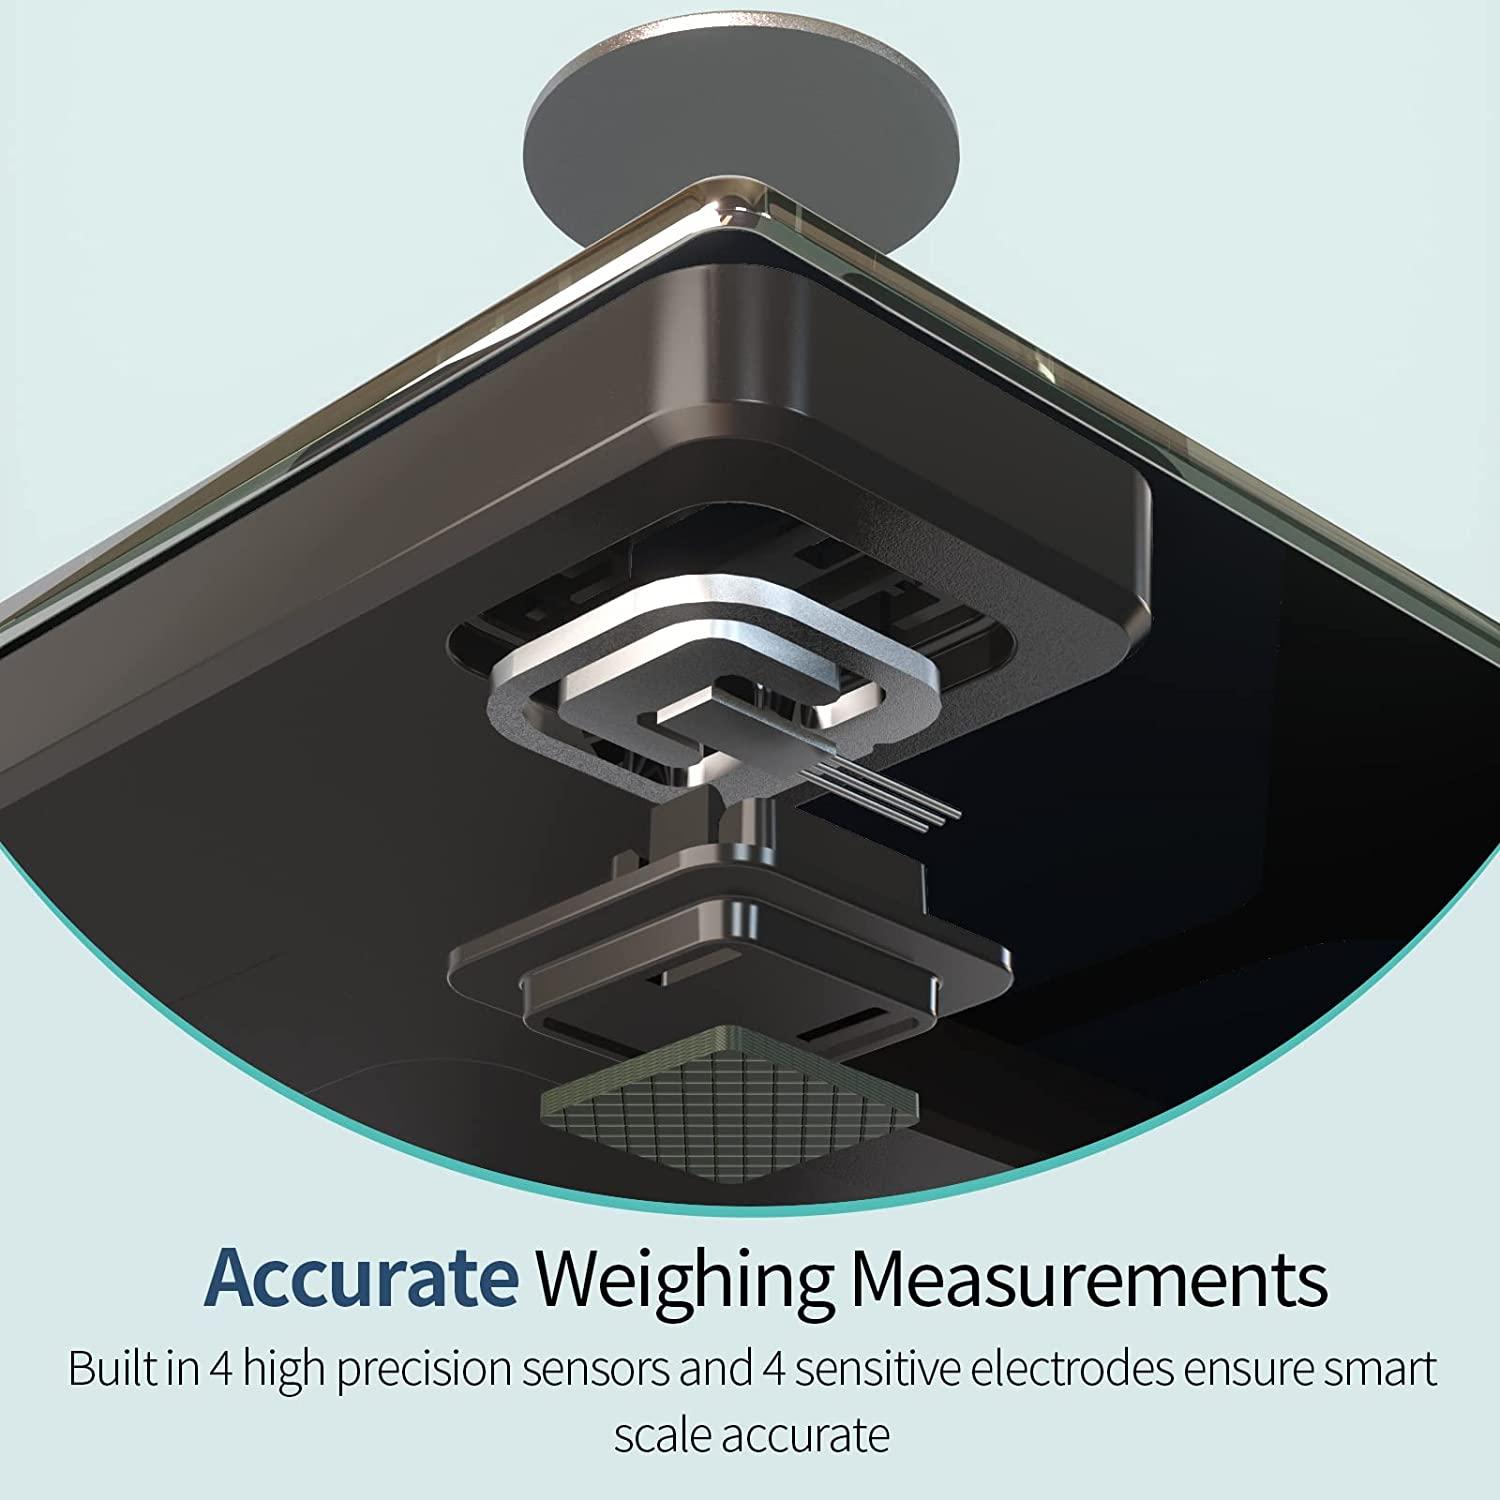 Body Fat Scale, High Accurate Measurement Digital Smart Bathroom